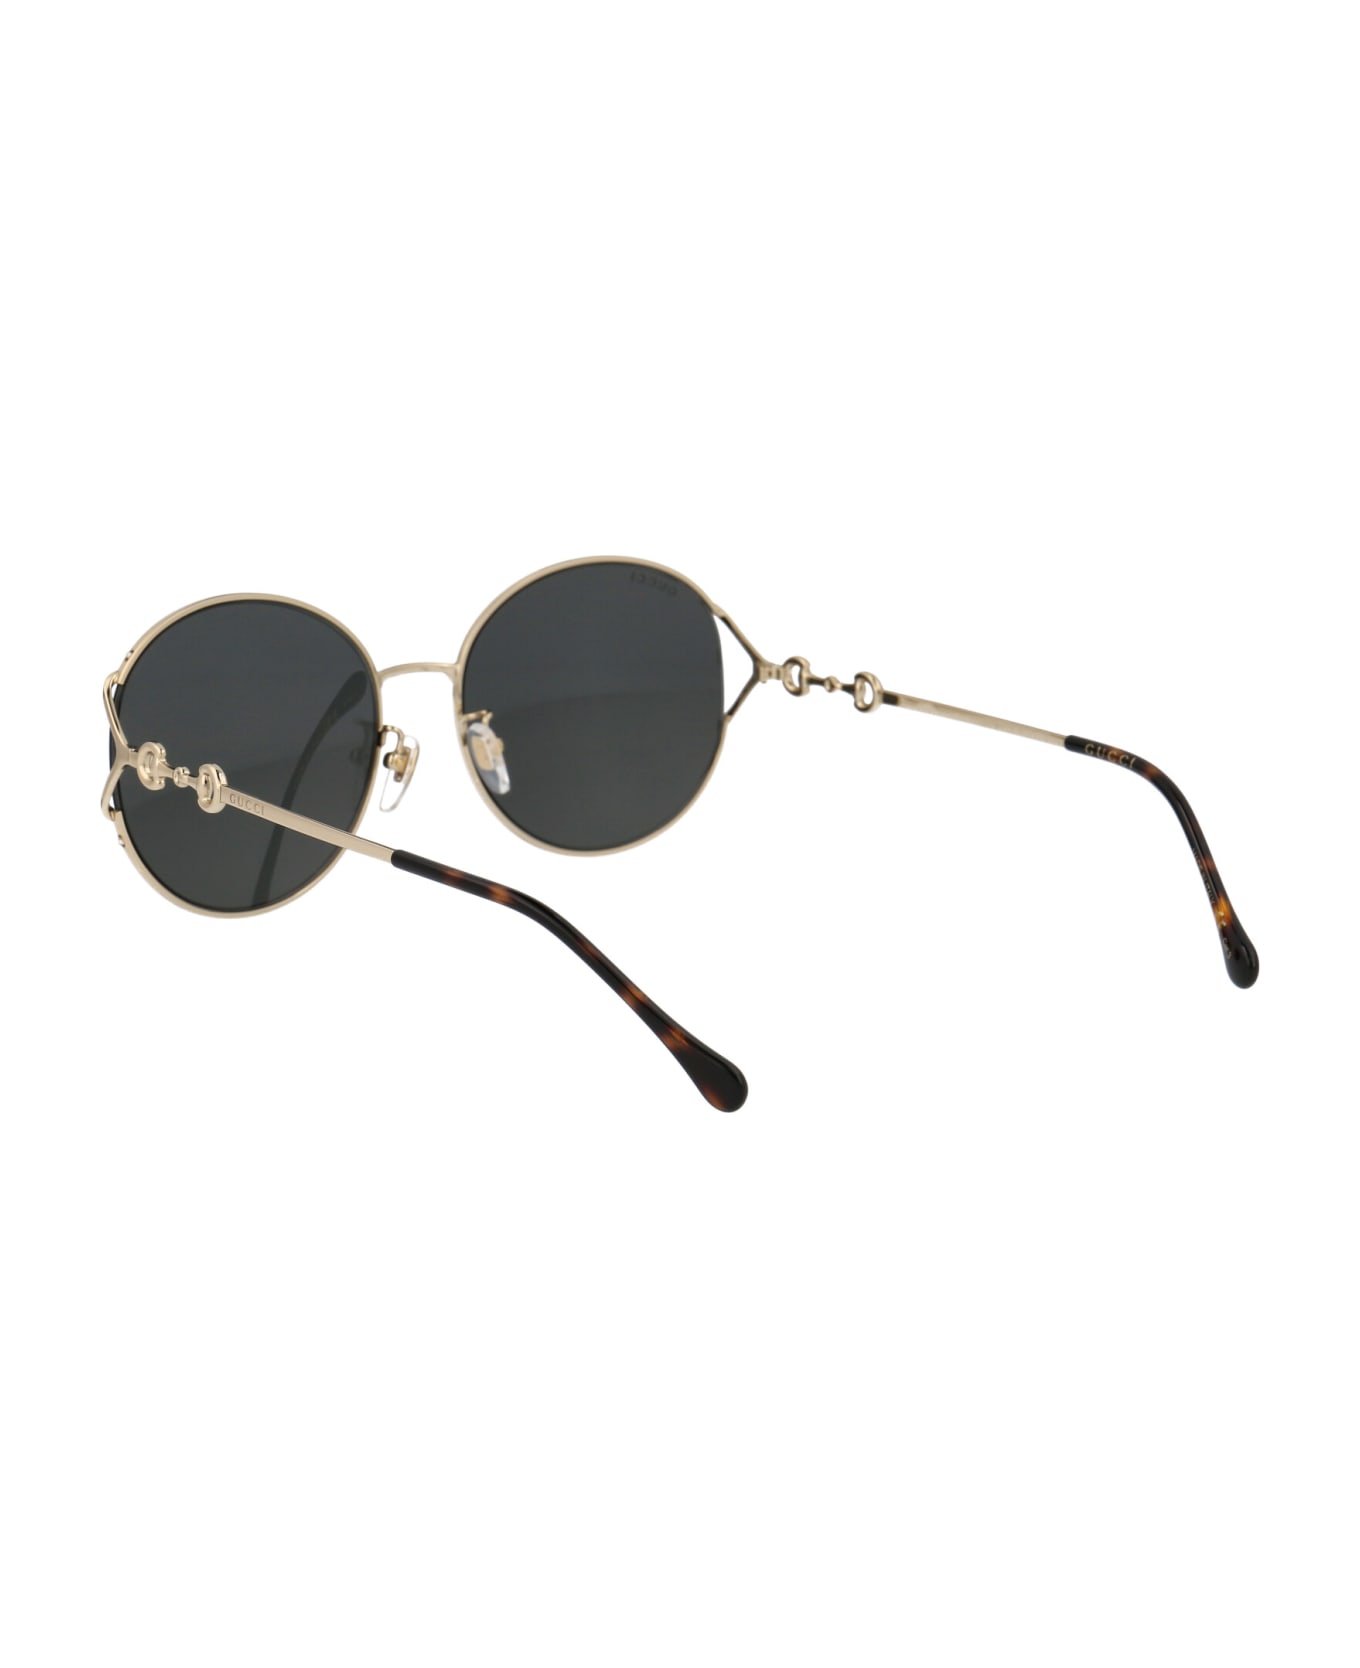 Gucci Eyewear Gg1017sk Sunglasses - 001 GOLD GOLD GREY